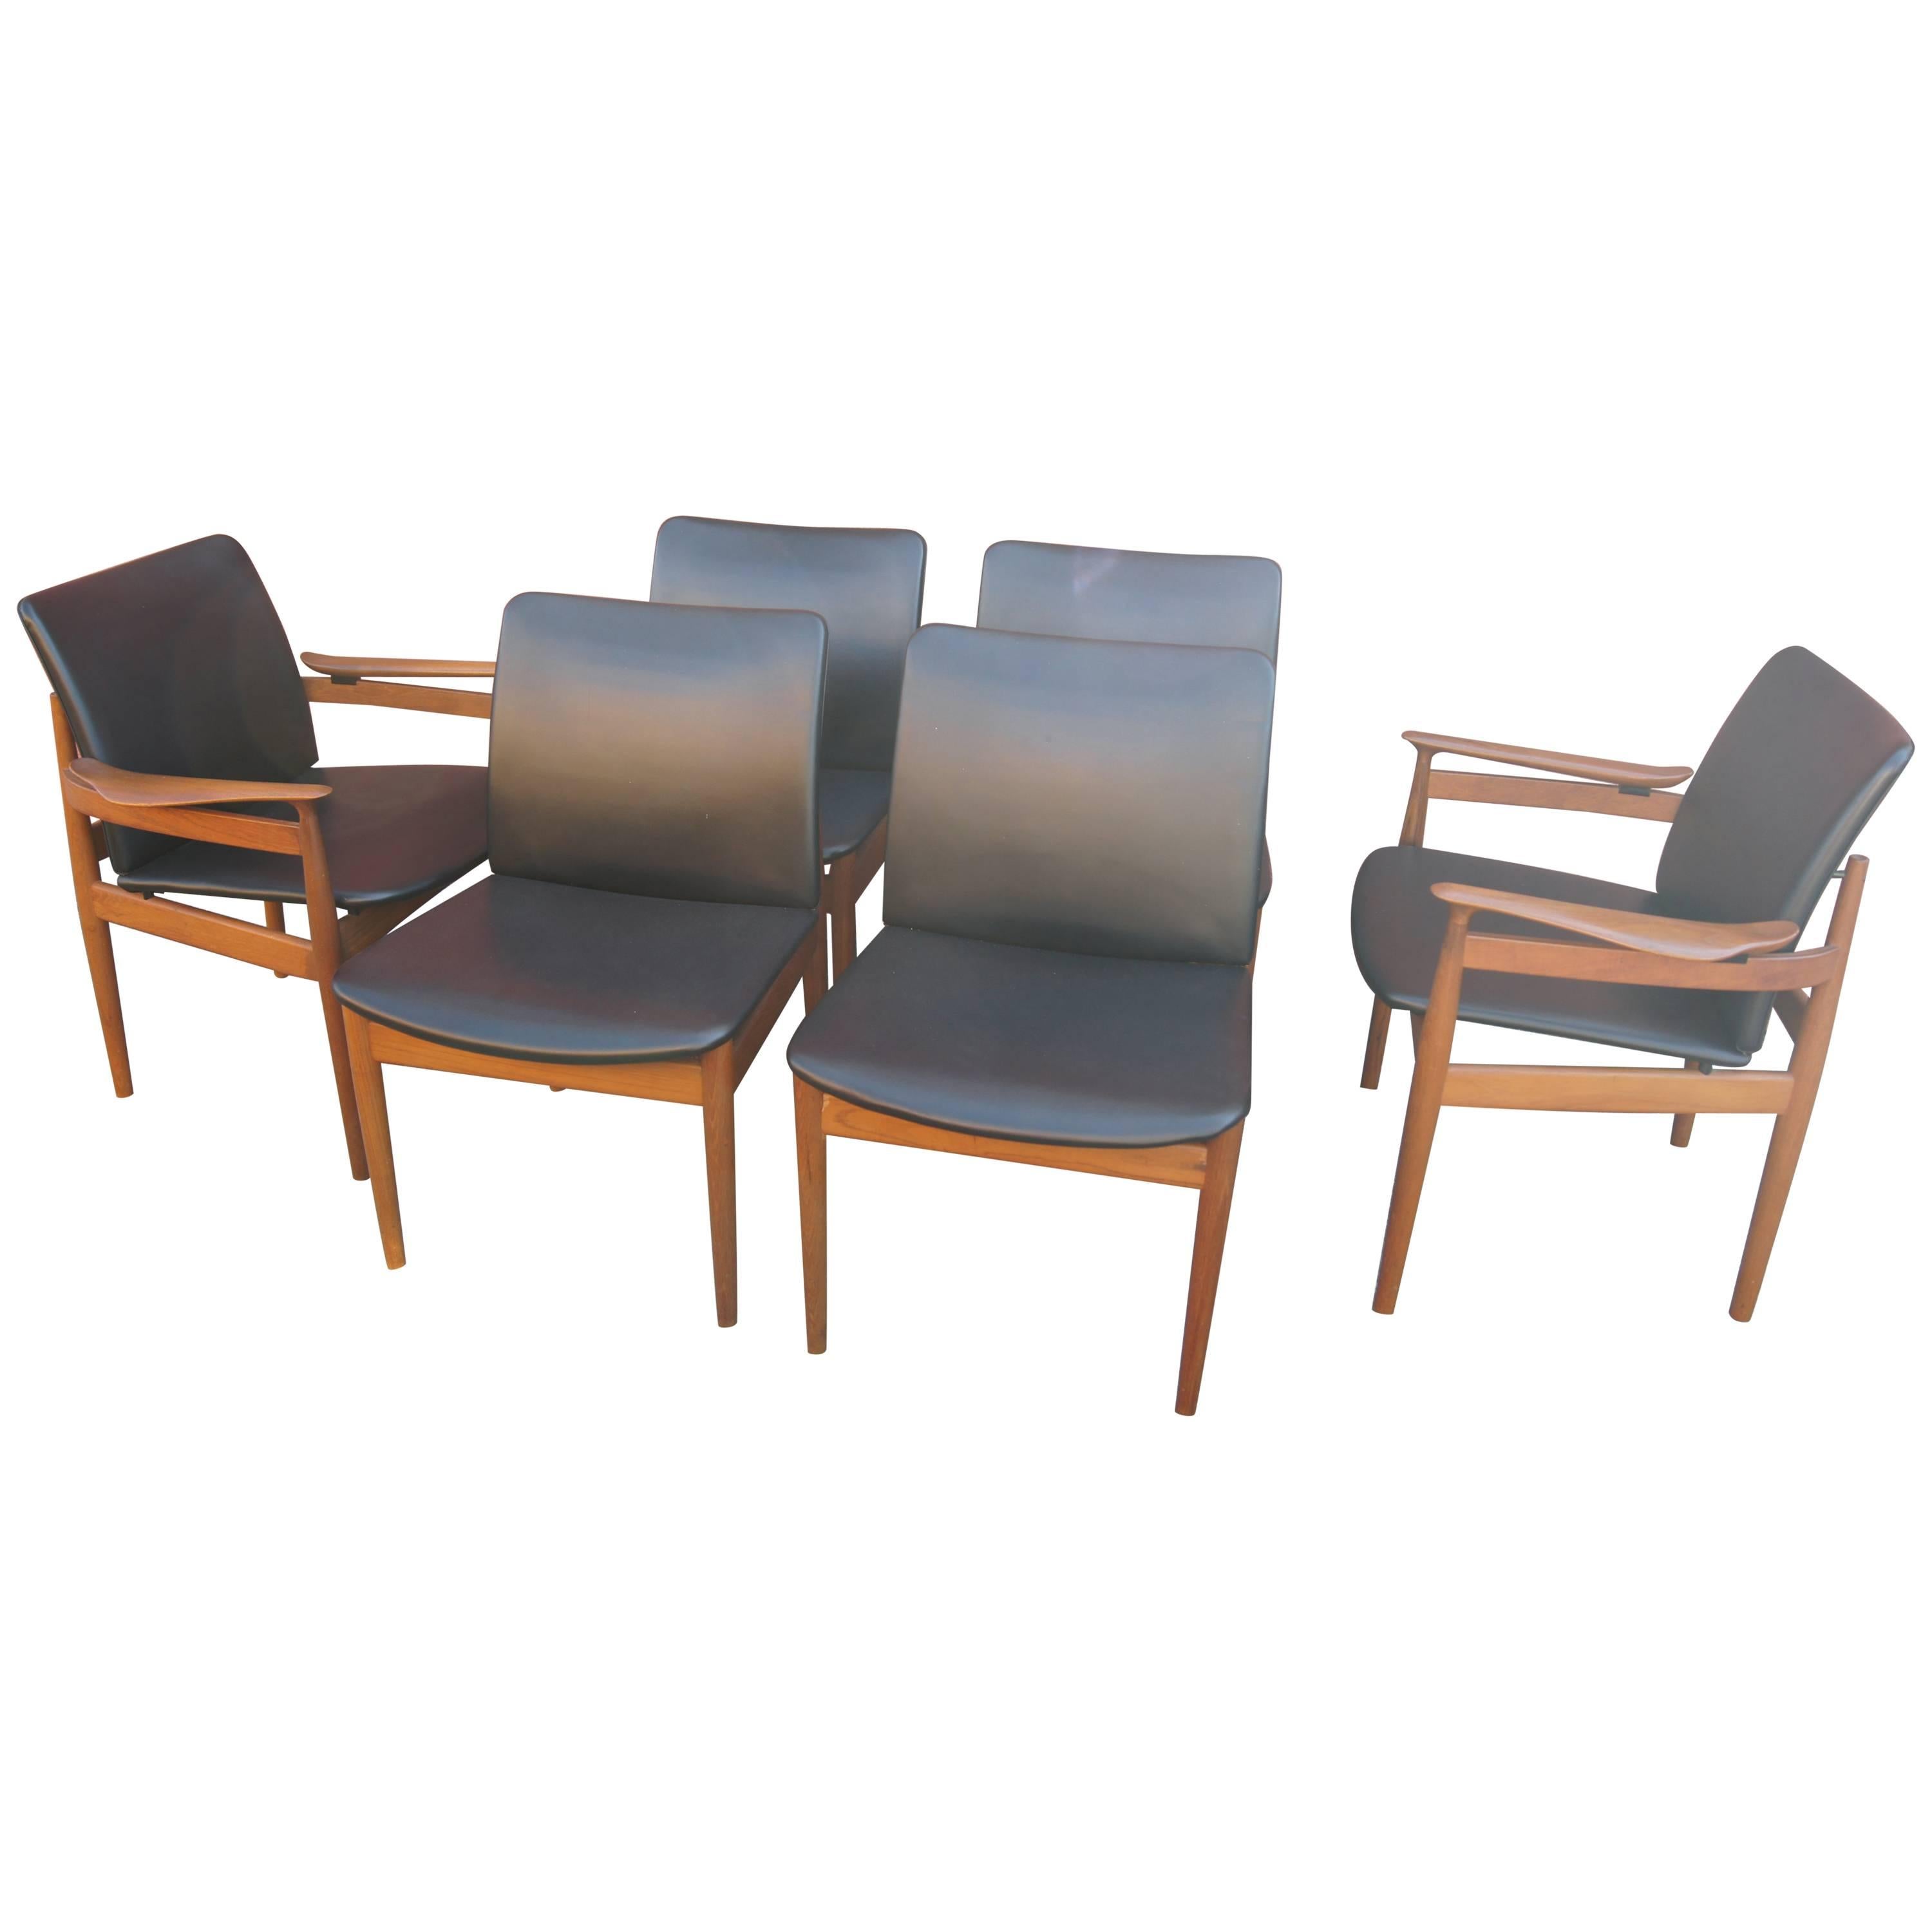 Set of Six Teak Dining Chairs, Models 191 & 192, by Finn Juhl For Sale